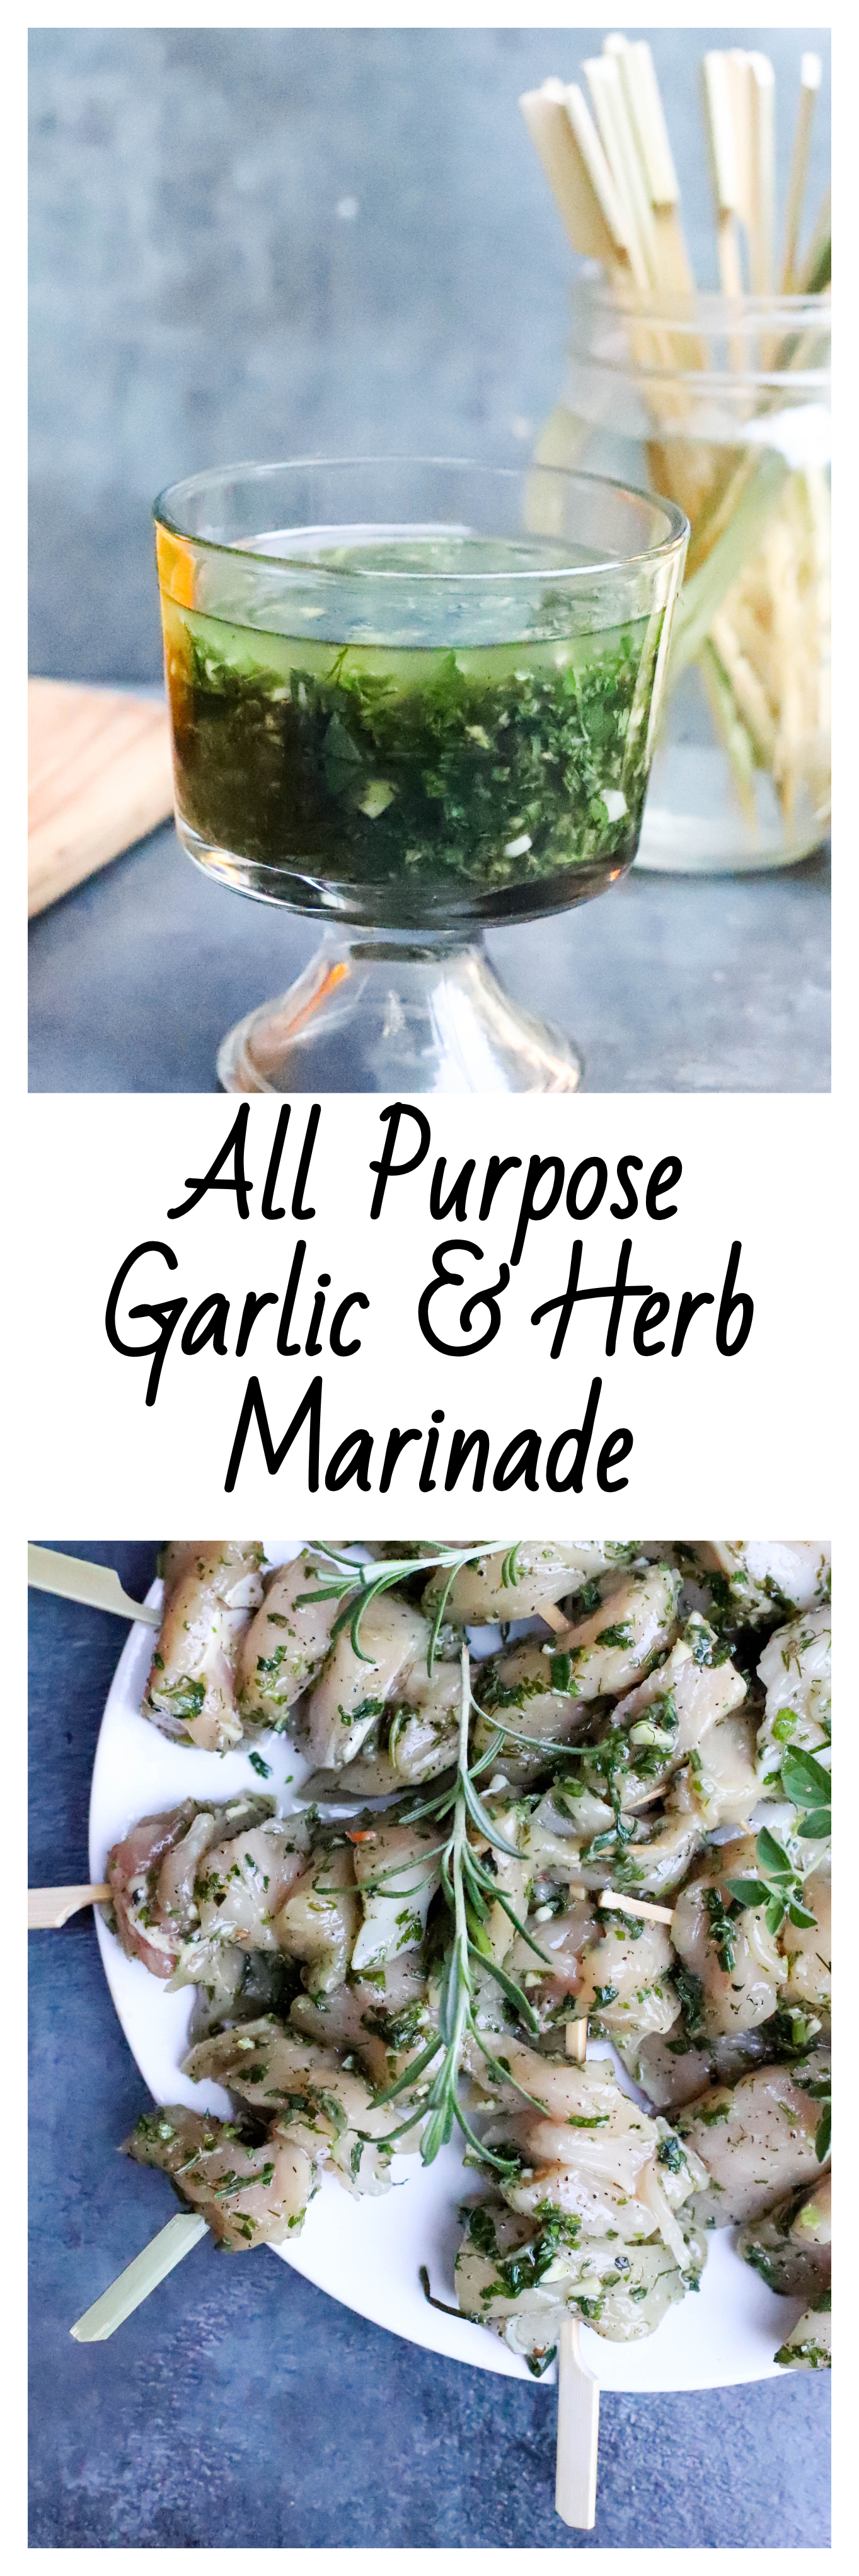 all purpose garlic & herb marinade.jpg